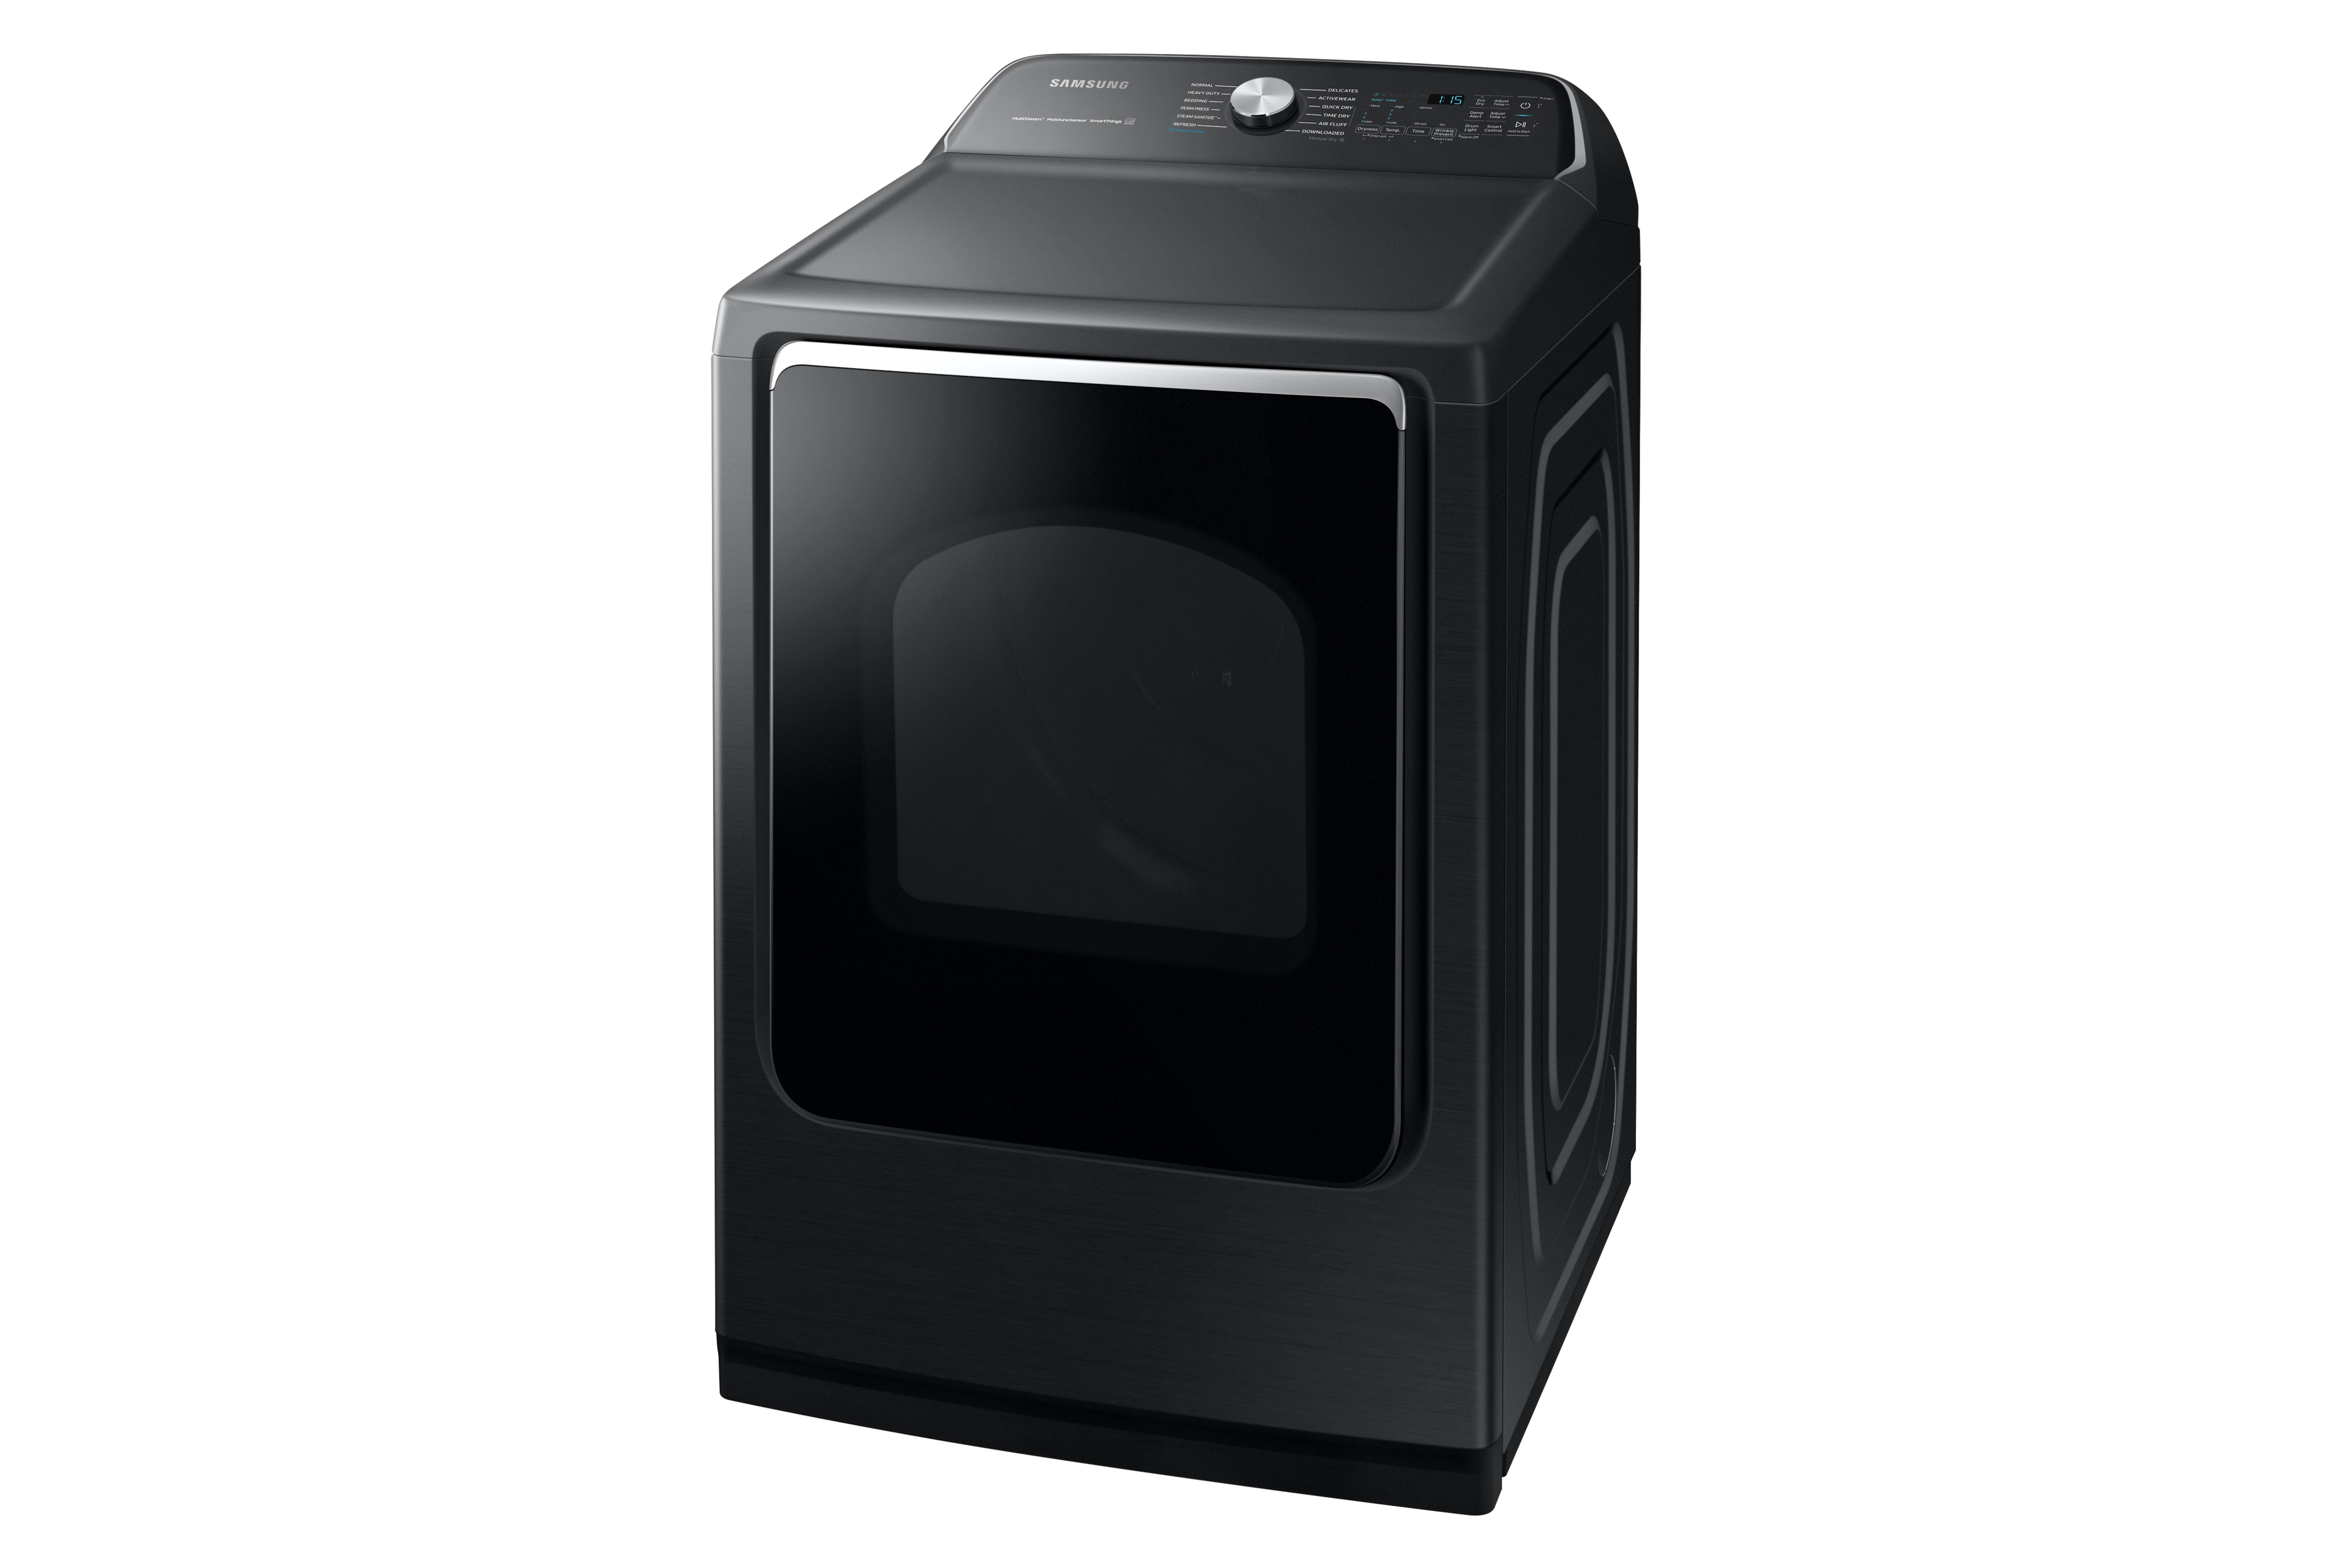 Samsung - 7.4 cu. Ft  Electric Dryer in Black Stainless - DVE52B7650V